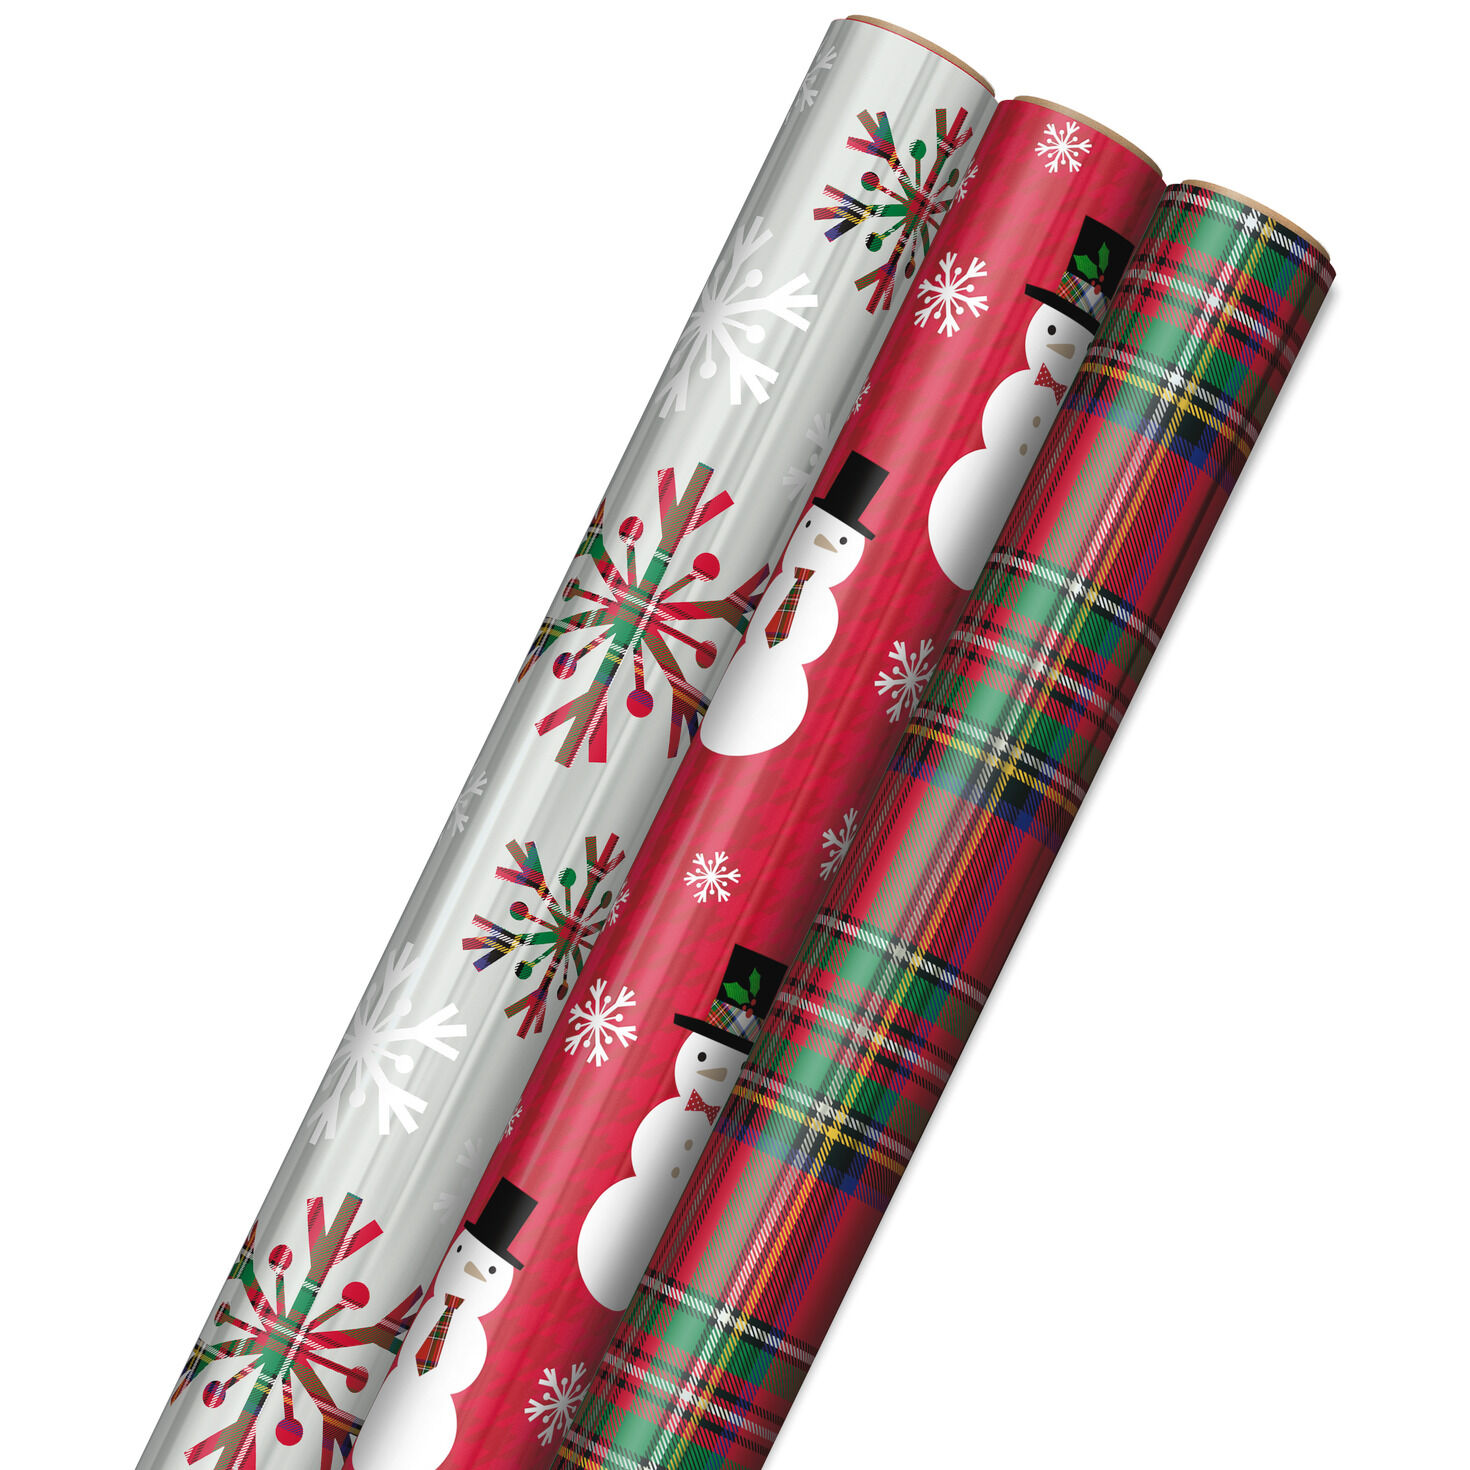 Best 6pcs Christmas Foil Wrapping Paper Set